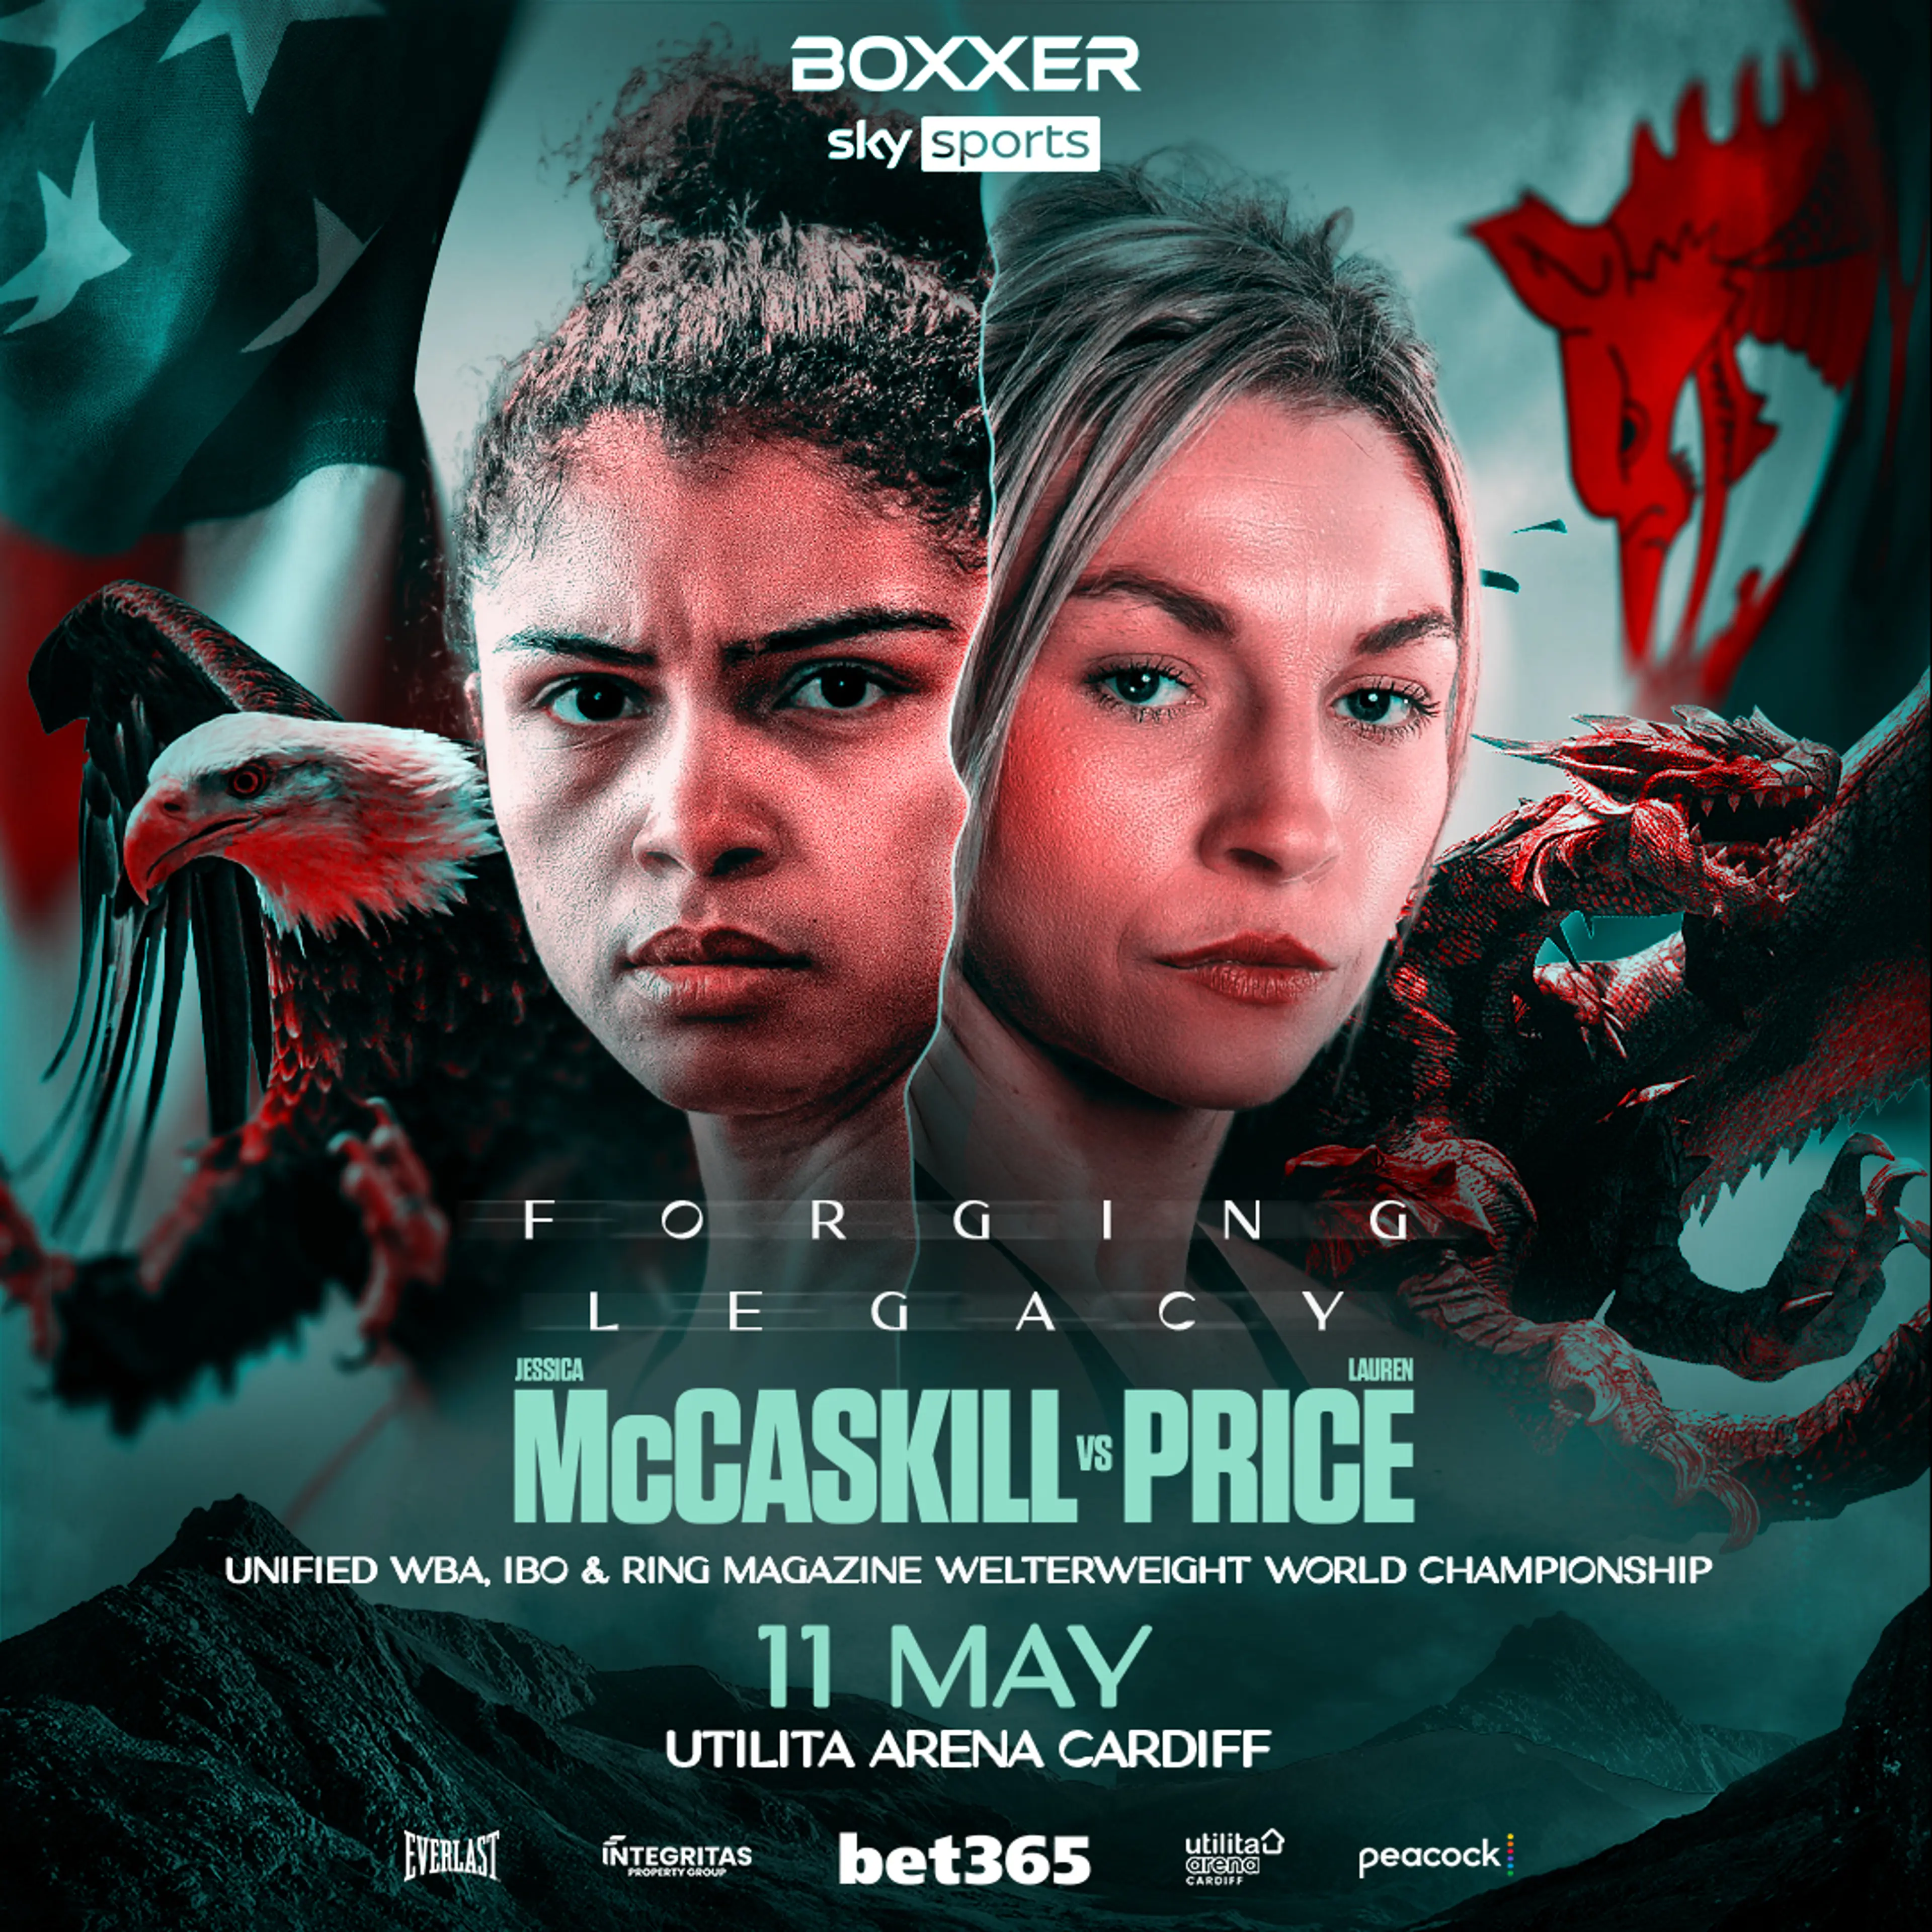 Boxxer presents McCaskill vs Price